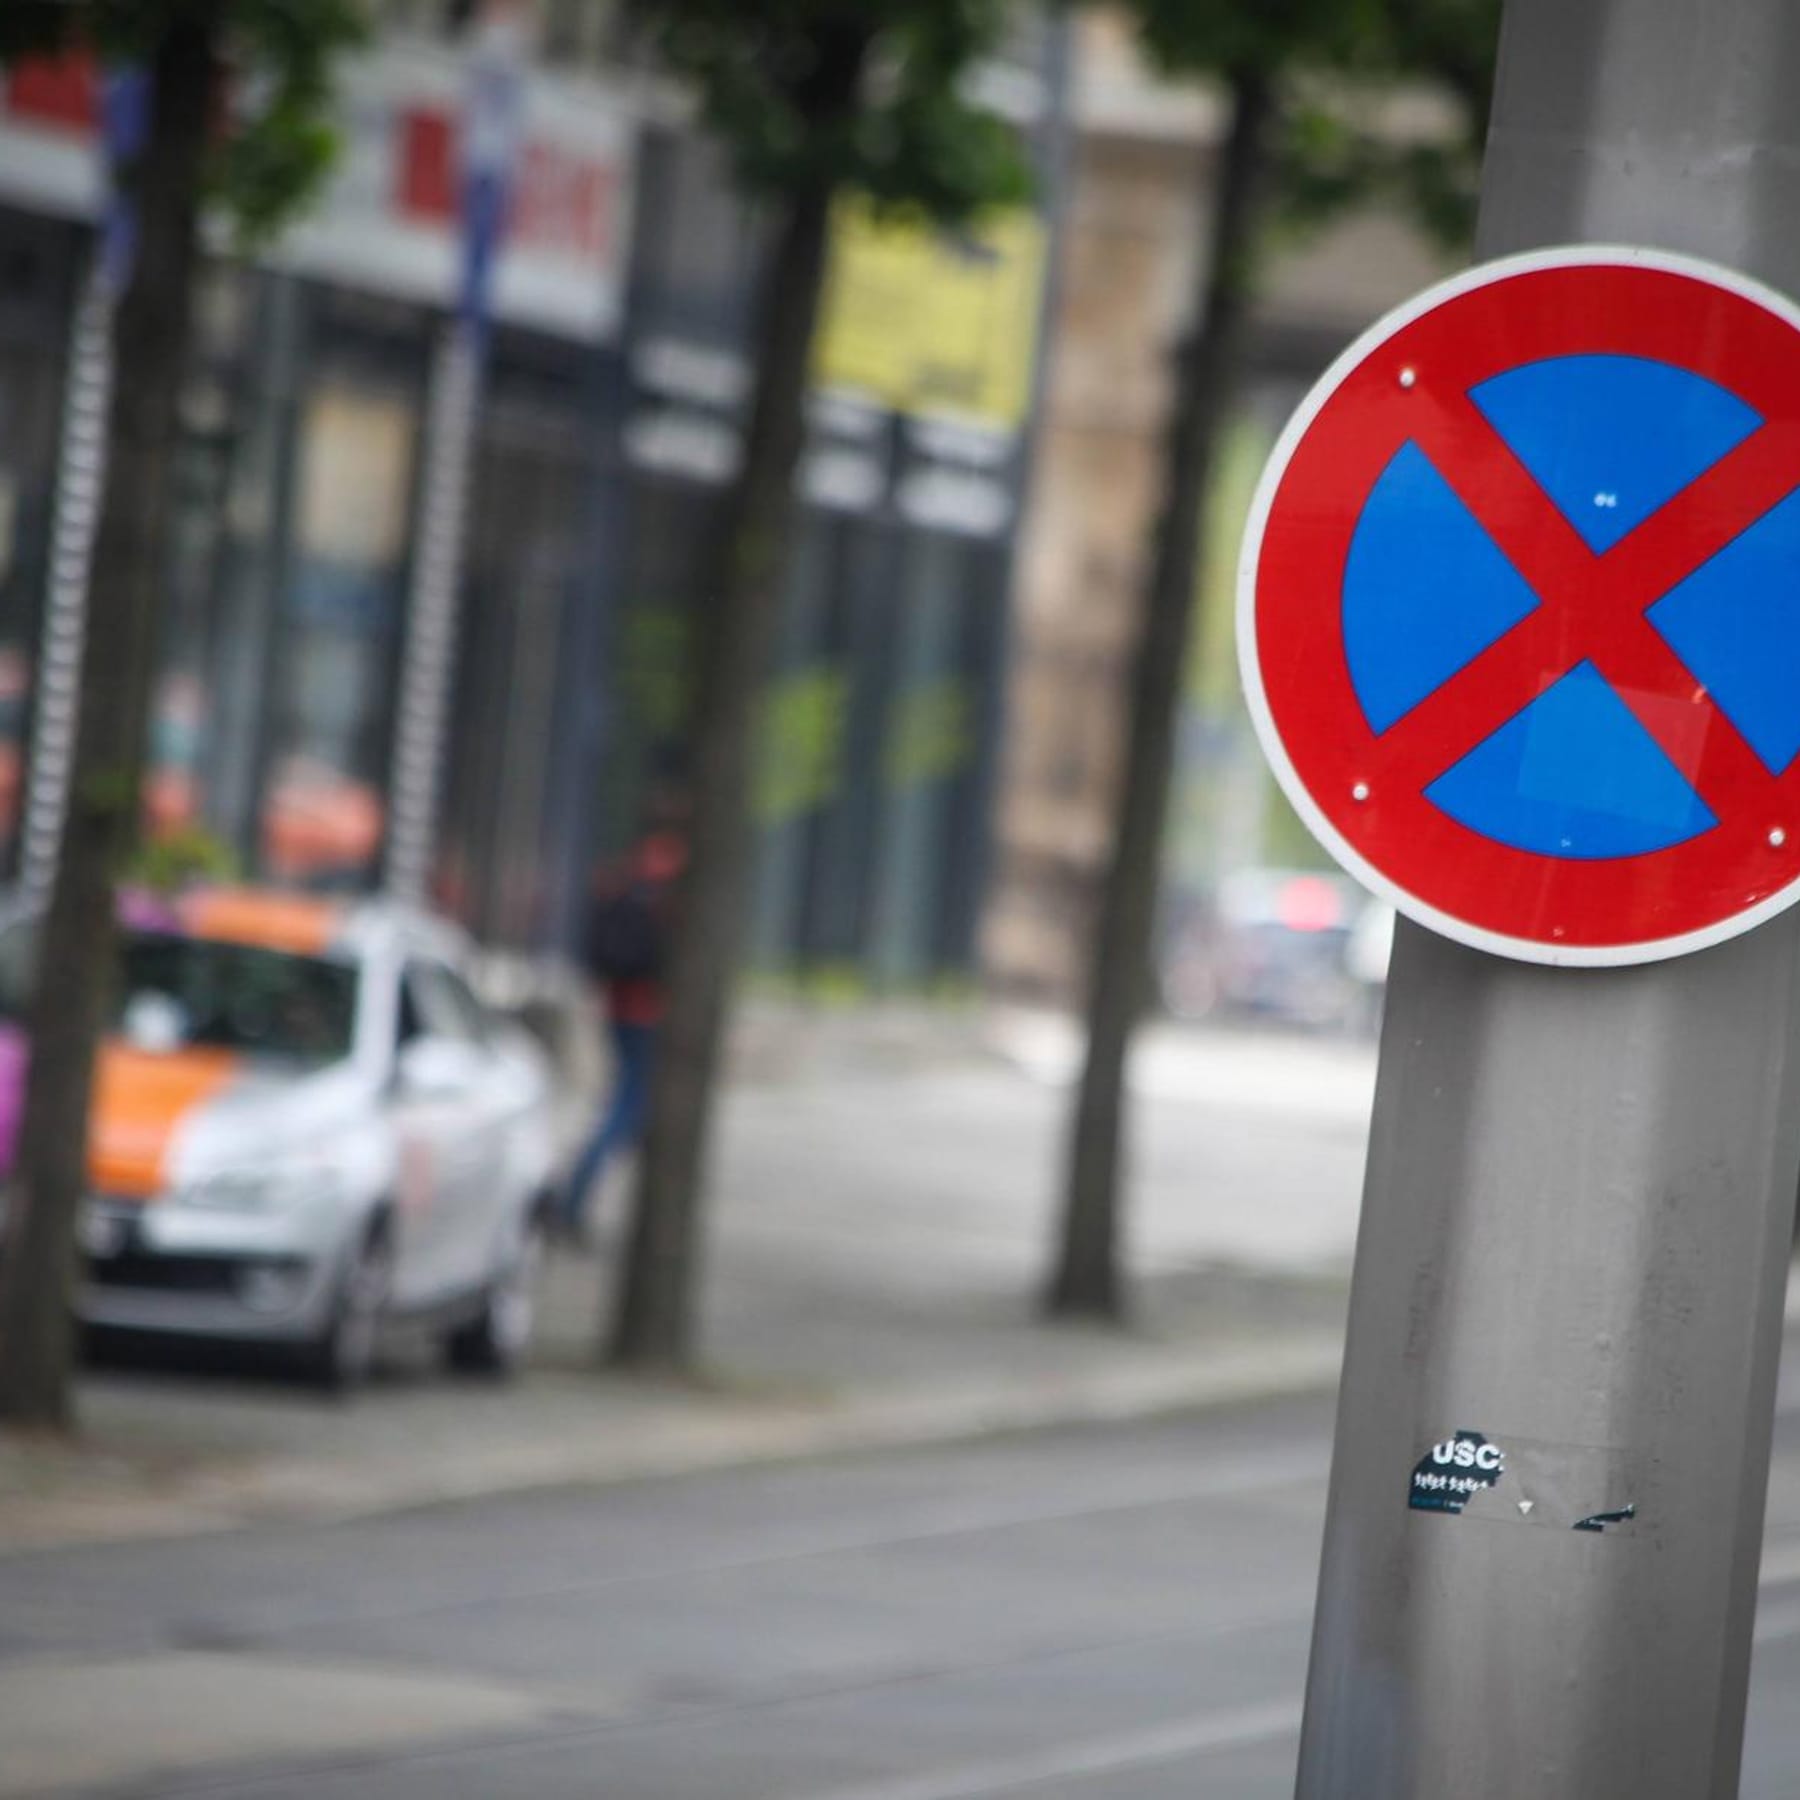 Schild Parkverbot Parkplatz Hinweisschild Parkverbotsschild Parken verboten P13 